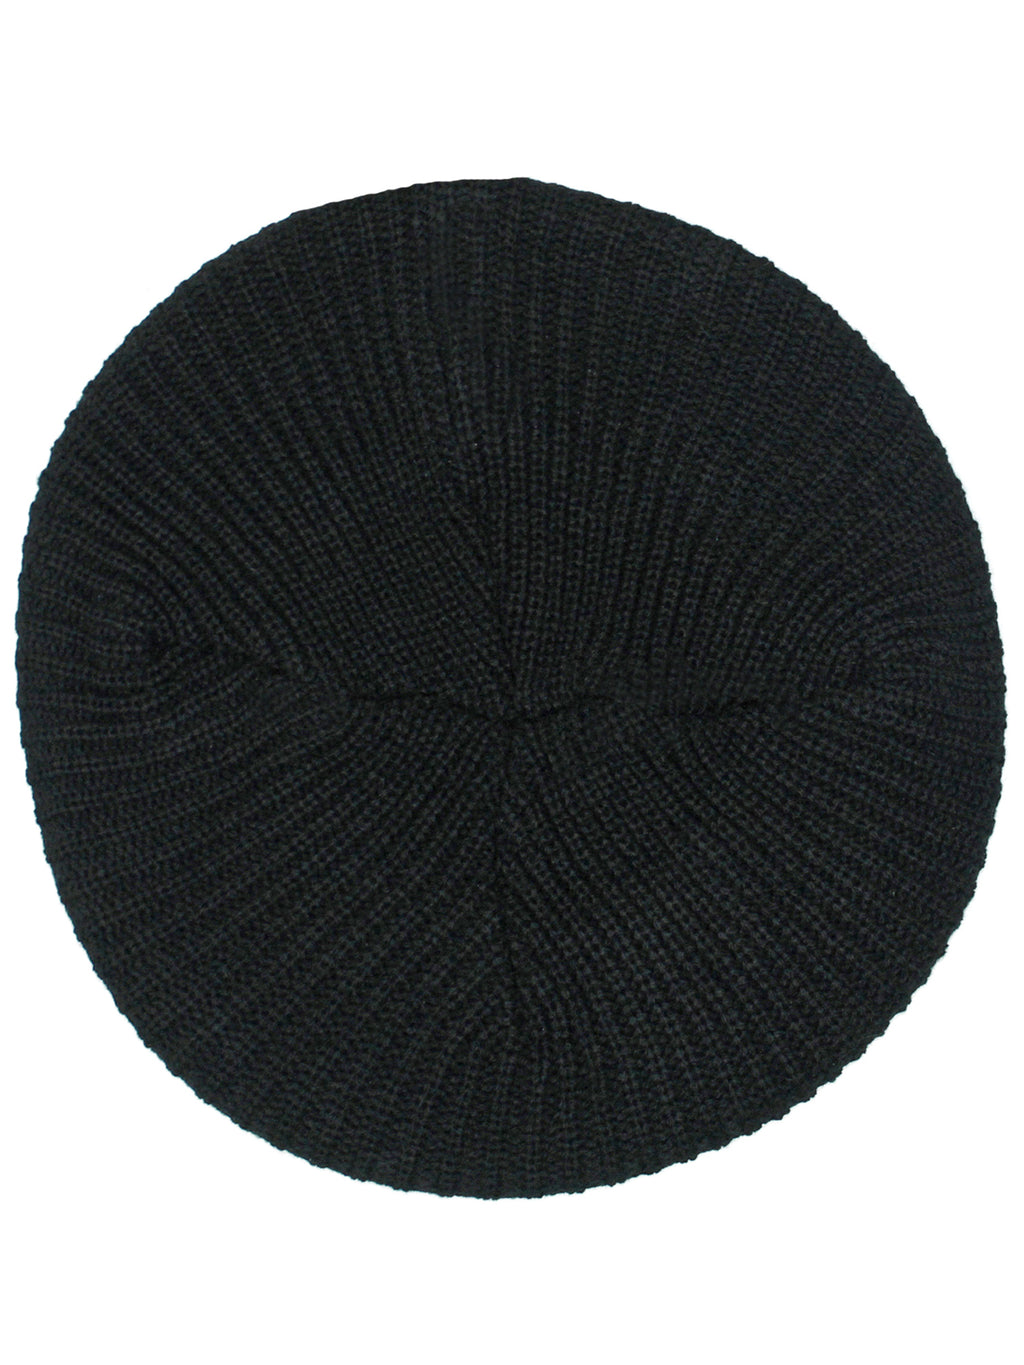 Black Knit Soft Traditional Tami Beret Hat Cap